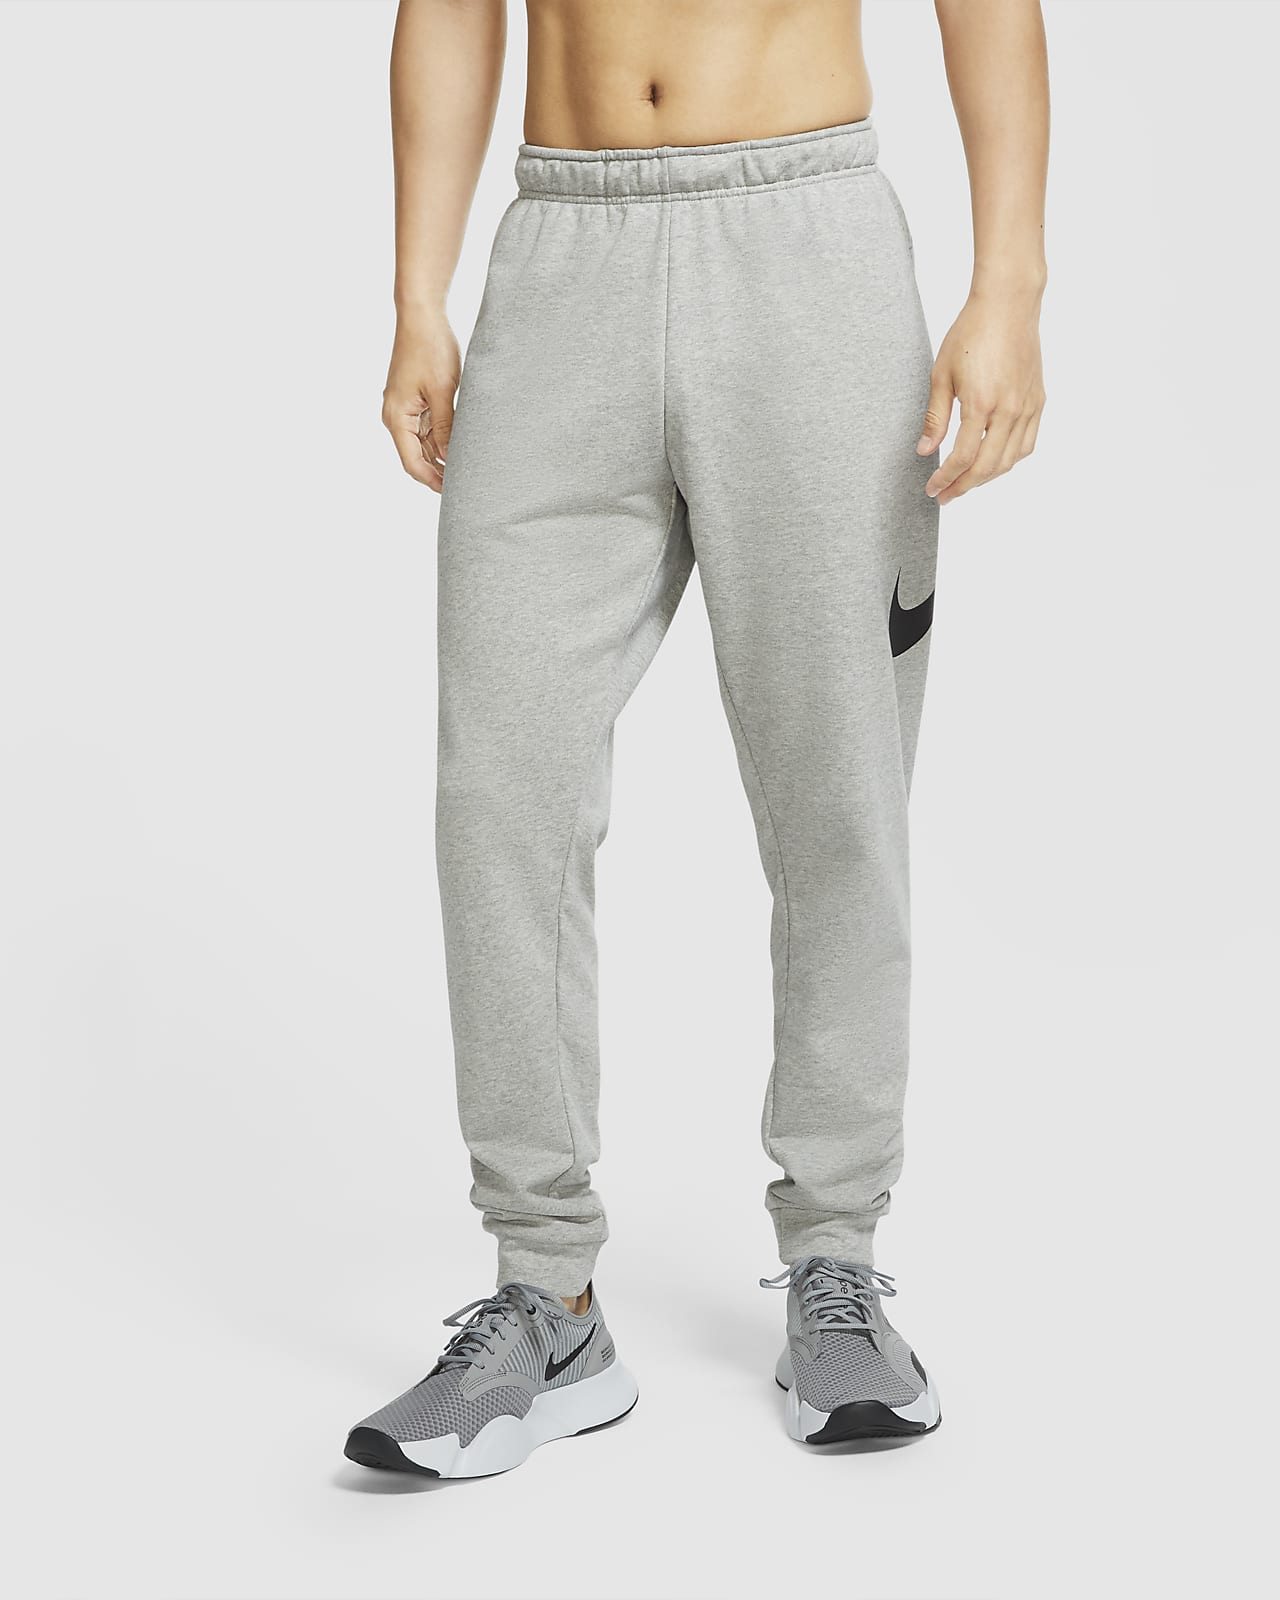 Nike Dry Graphic Men's Dri-FIT Taper Fitness Trousers